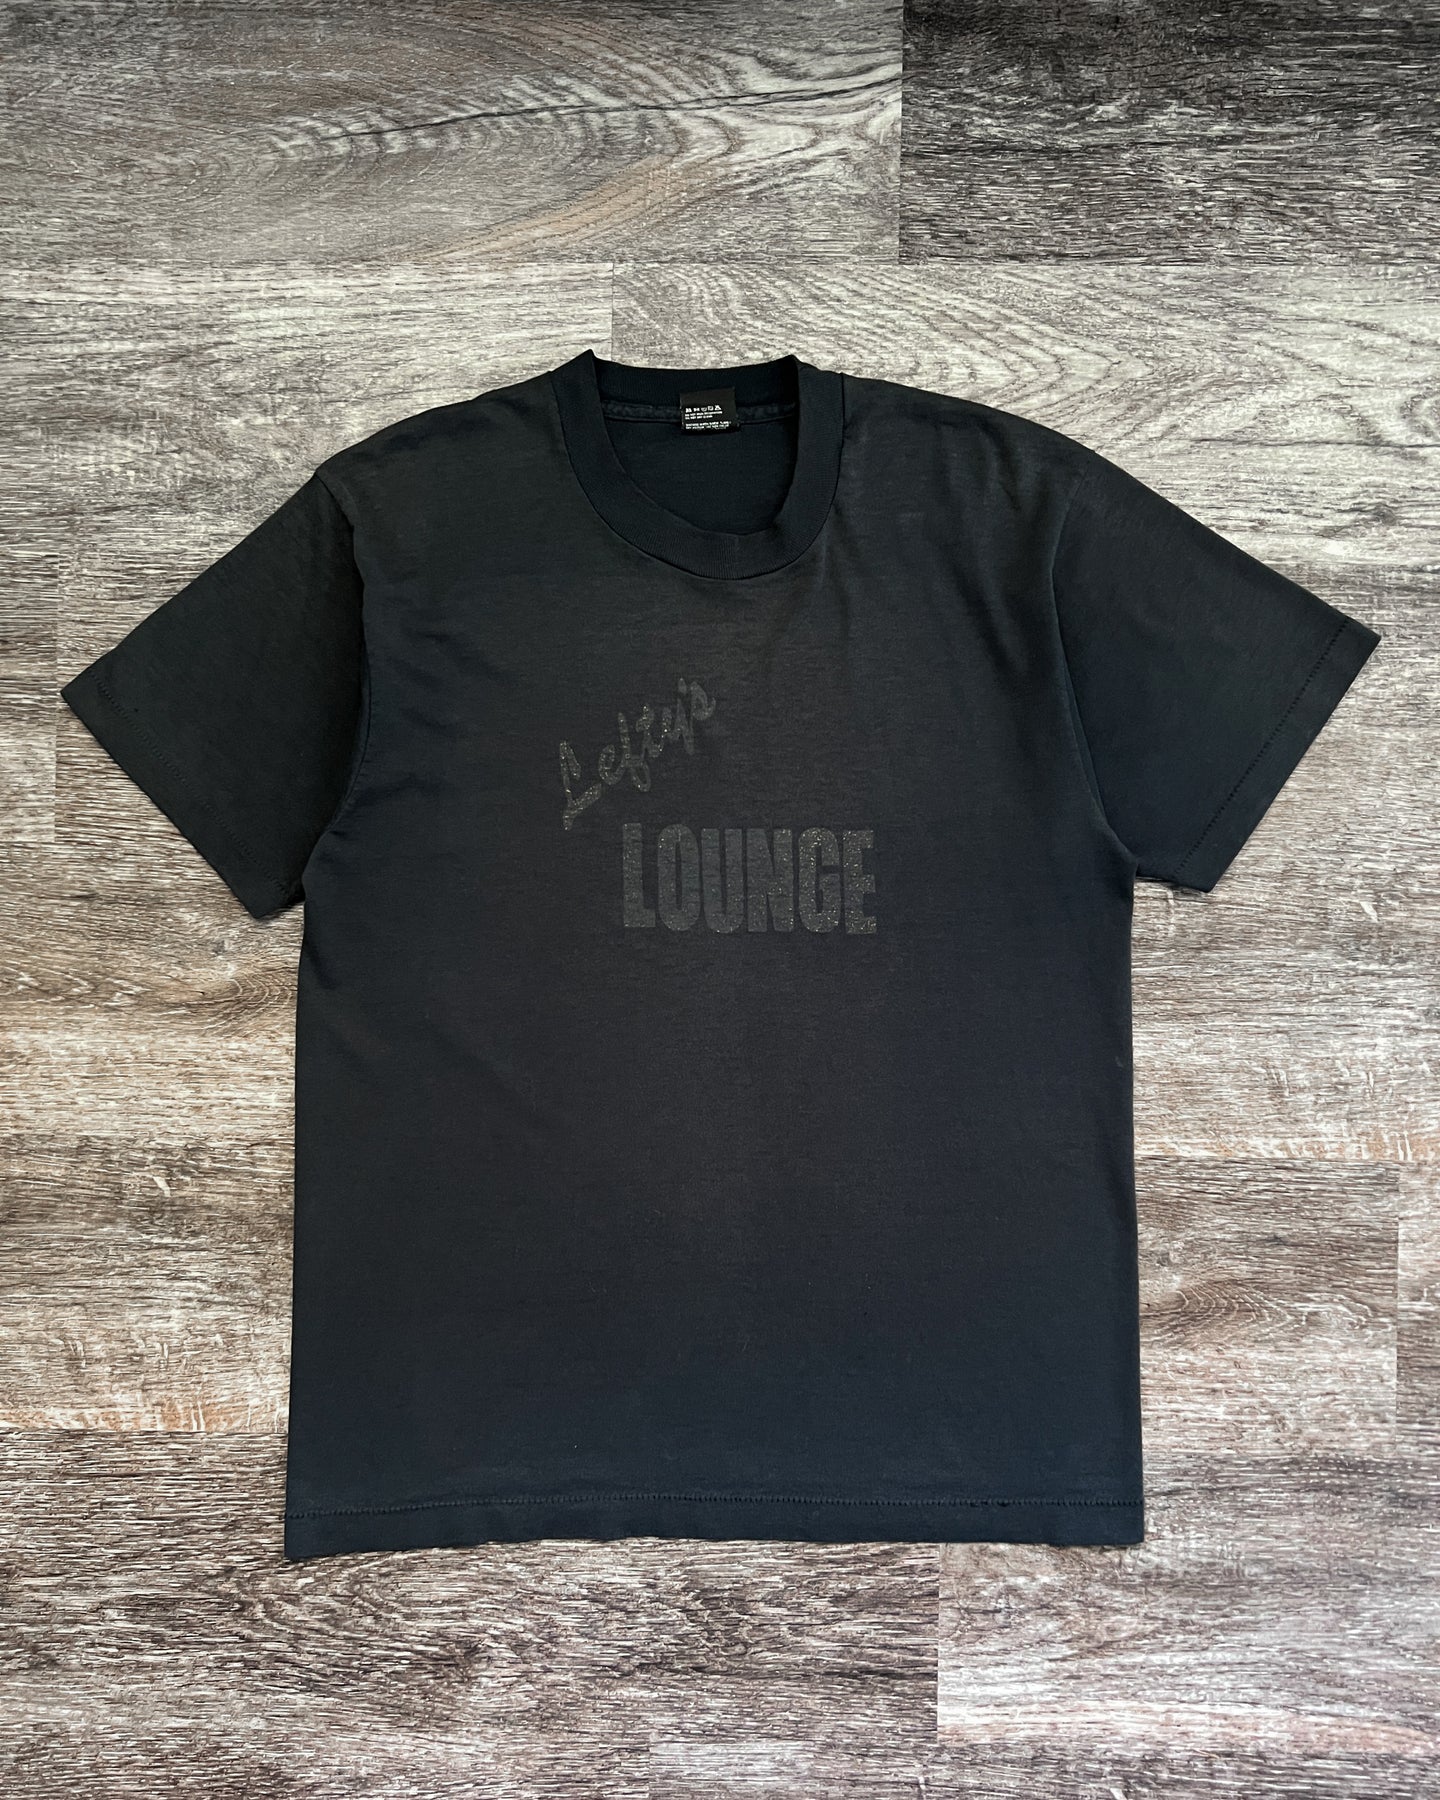 1990s Lefty's Lounge Faded Black Single Stitch Tee - Size Large